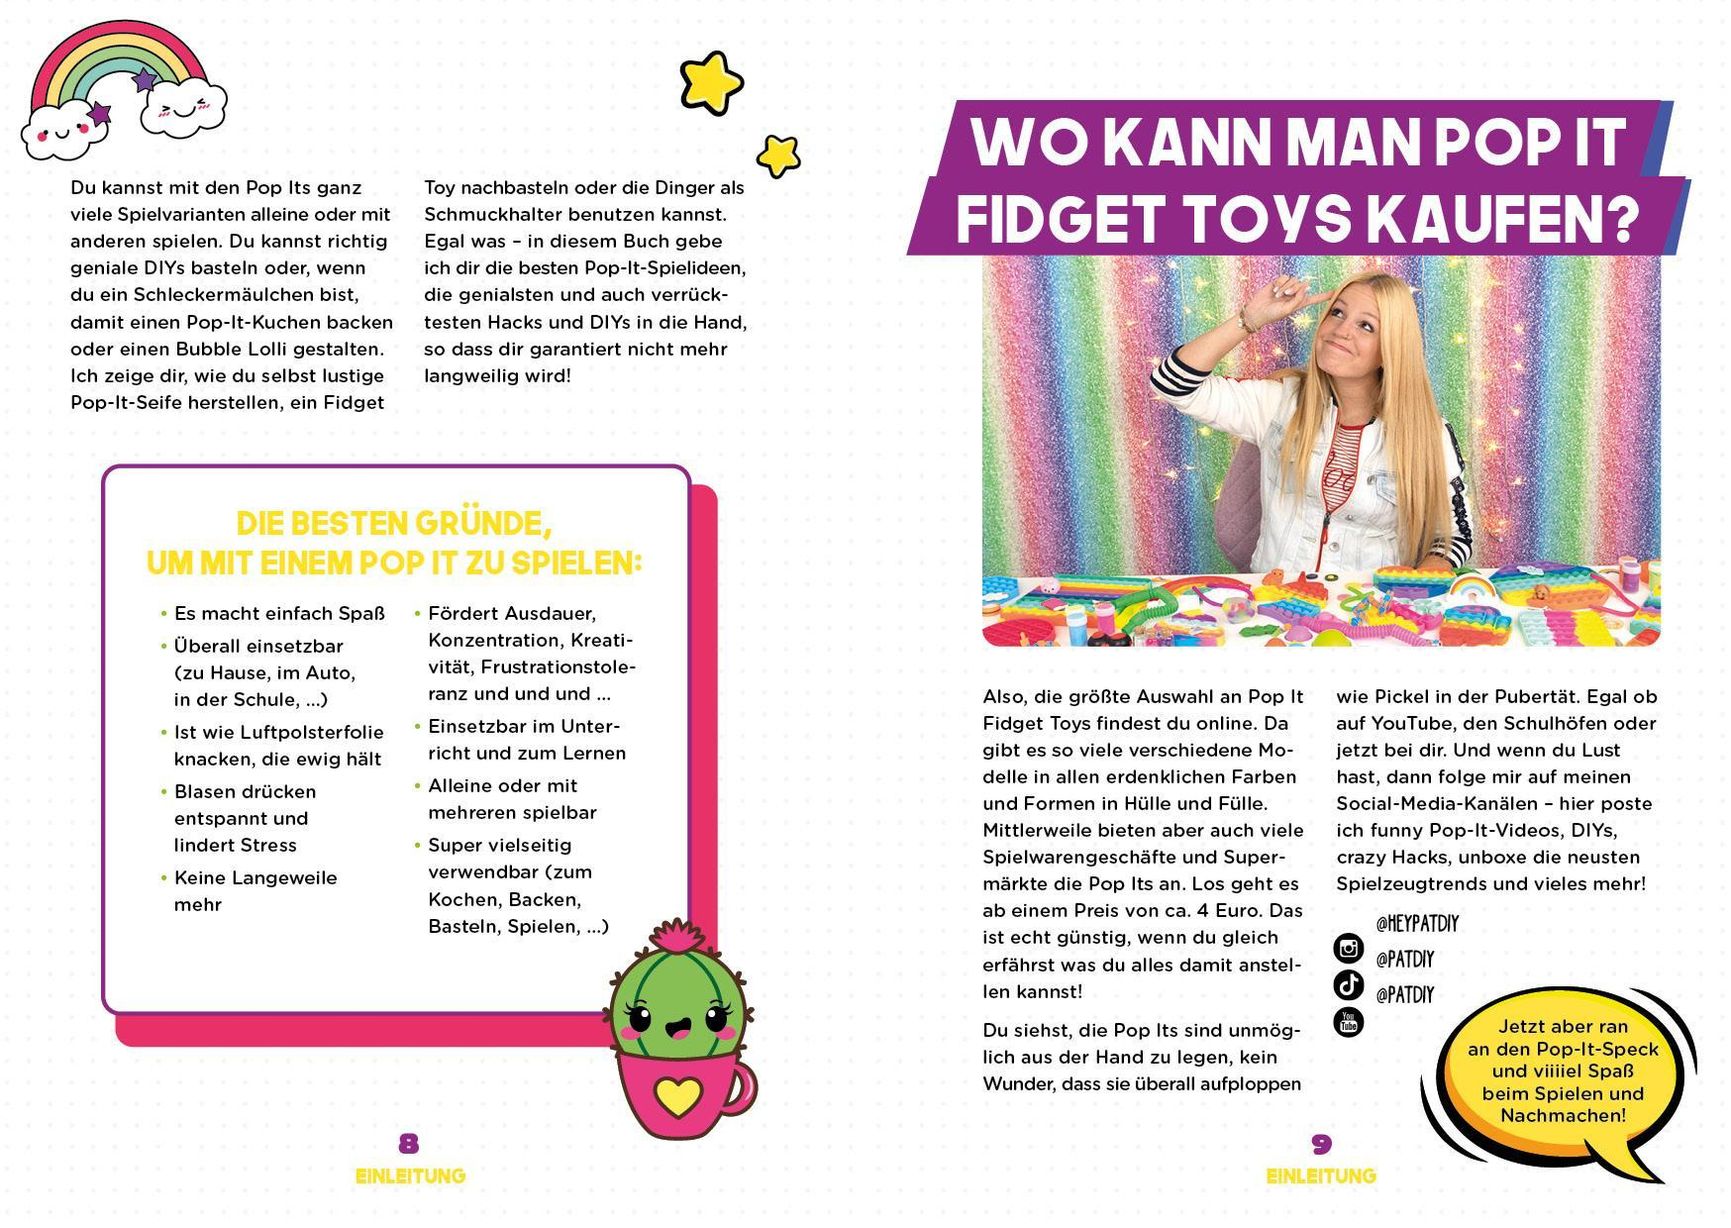 Pop it Fidget Toys - Games, Hacks & more vom YouTube-Kanal Hey PatDIY Buch